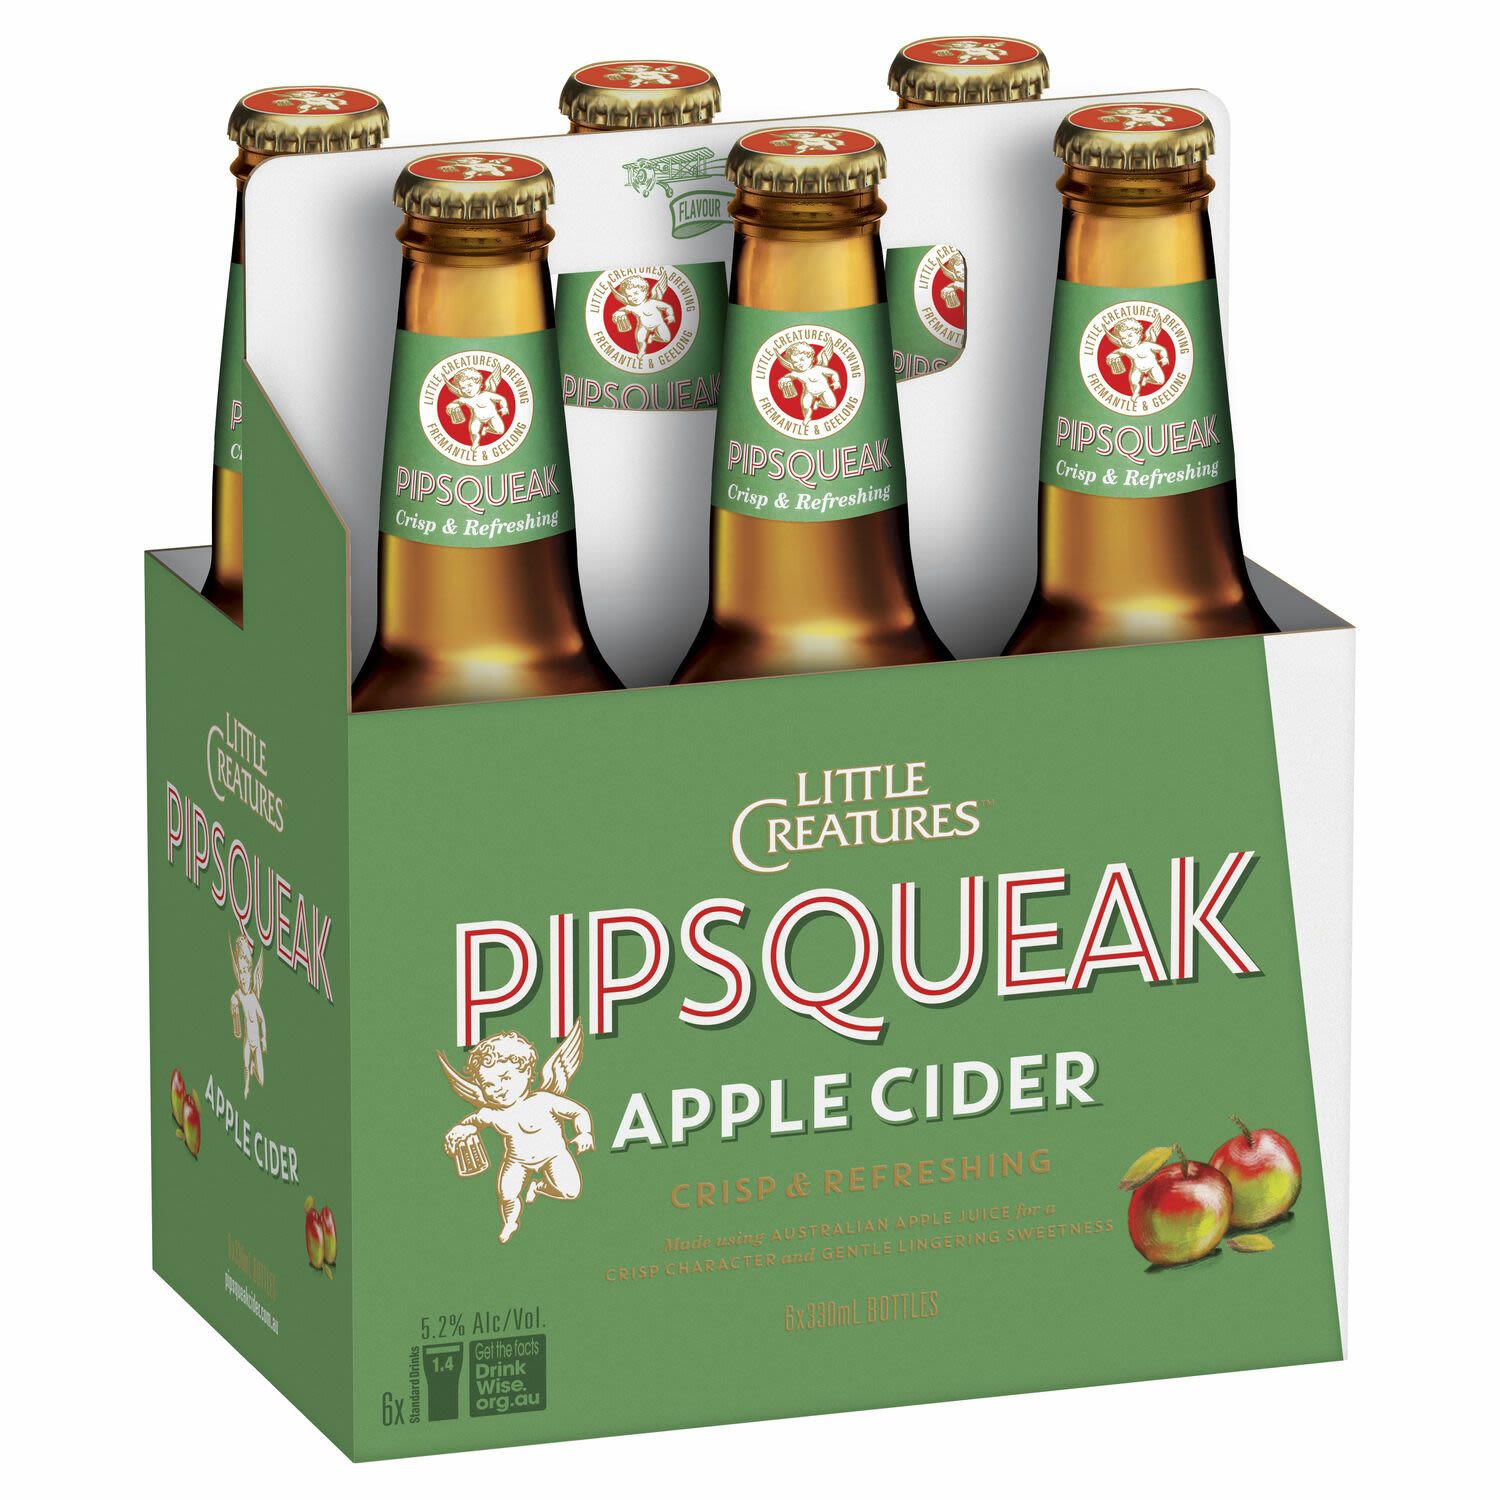 Little Creatures Pipsqueak Apple Cider Bottle 330mL 6 Pack